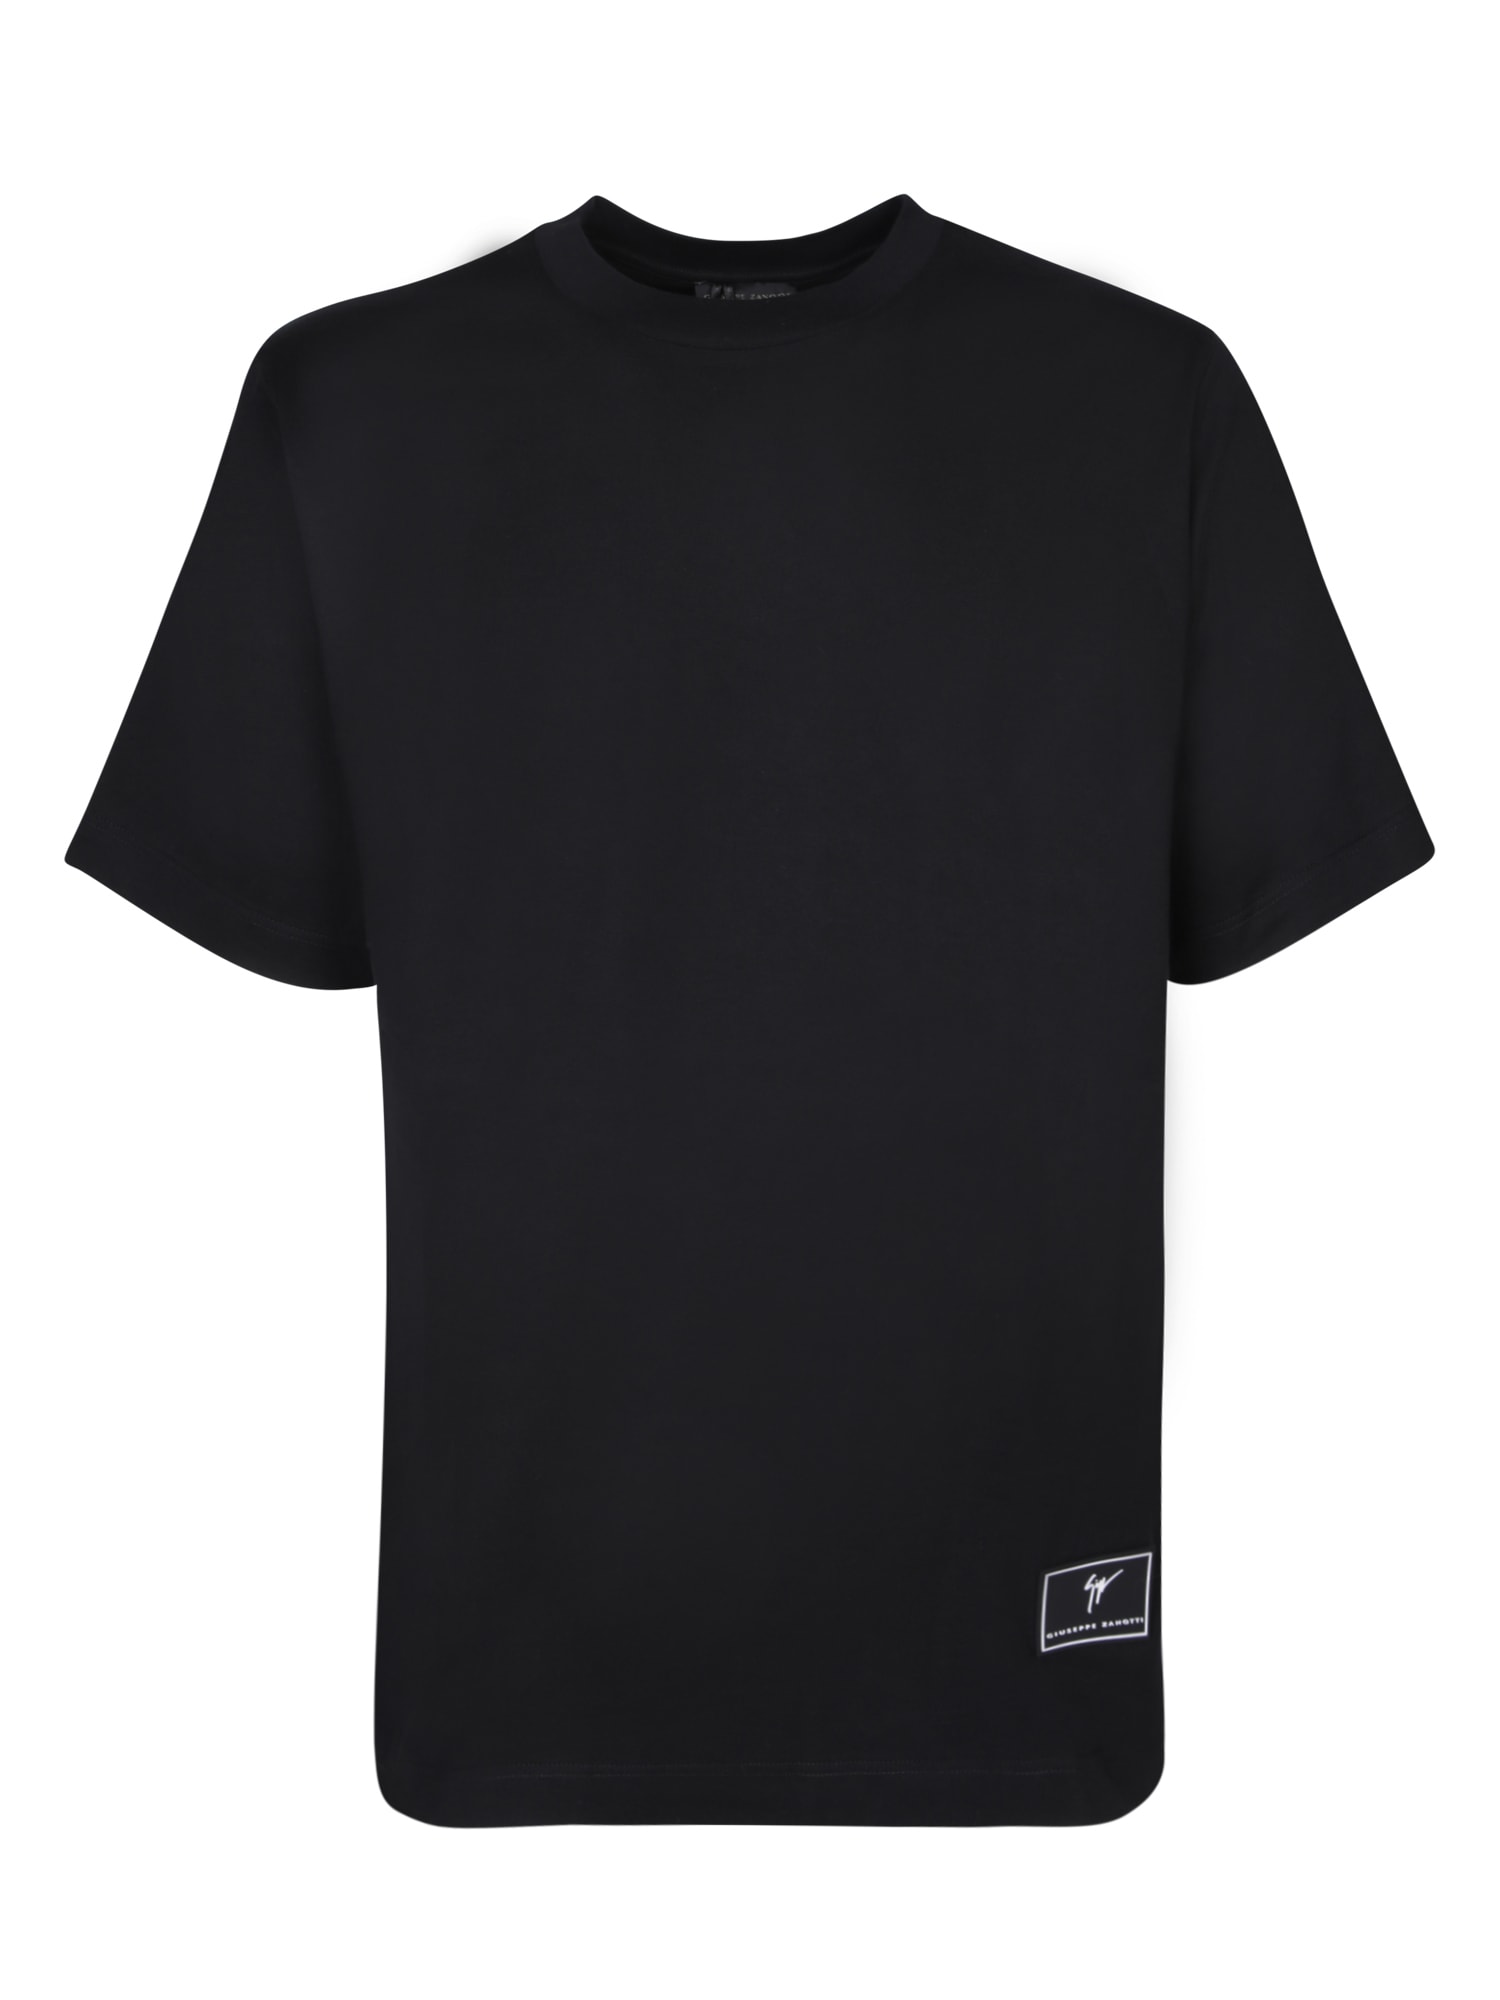 Lr-58 Black T-shirt